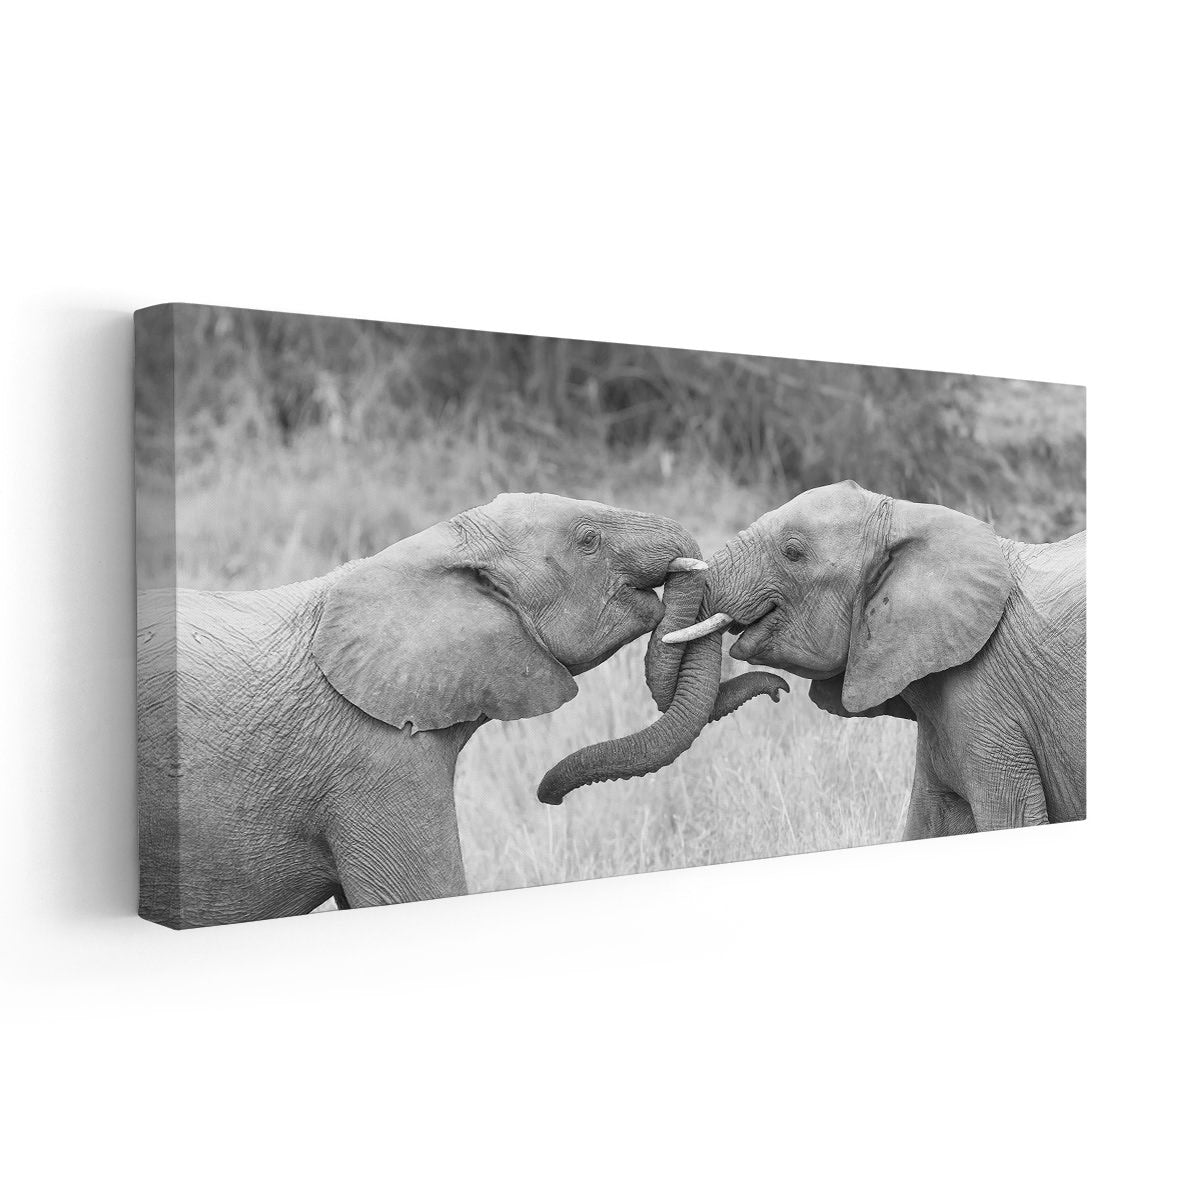 Elephants In Love Wall Art Canvas-Stunning Canvas Prints